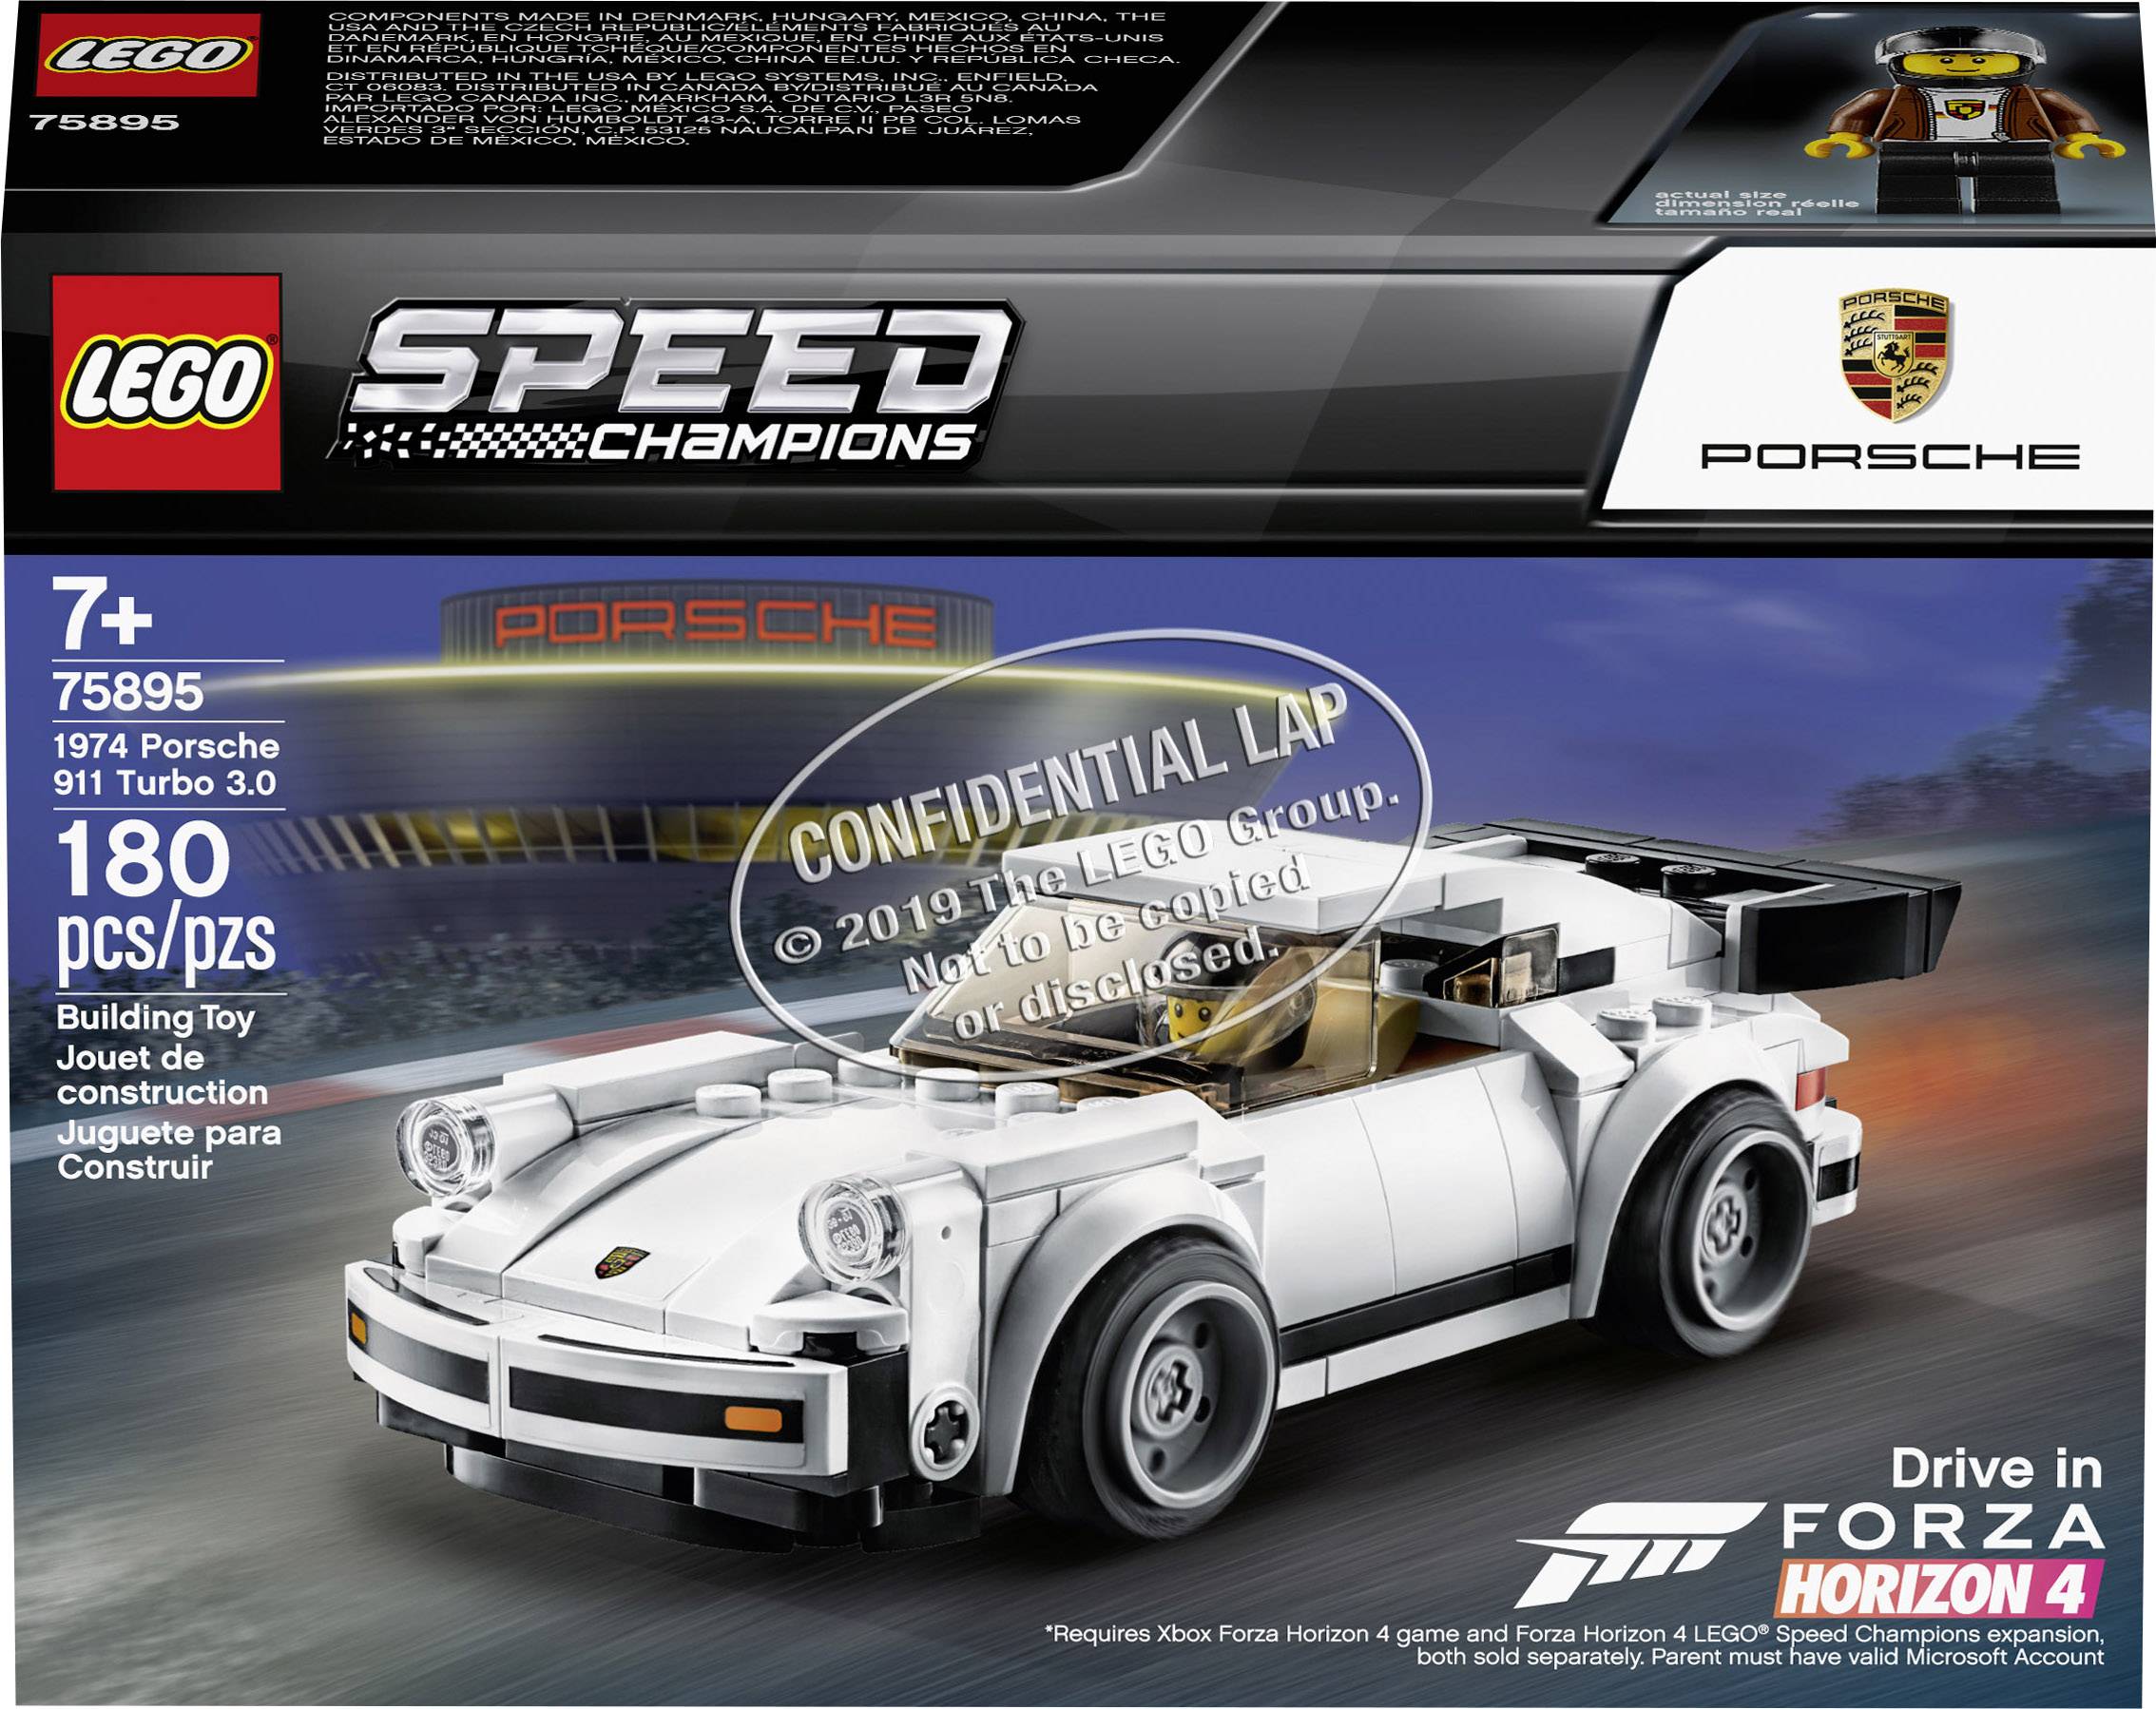 75895 for sale online LEGO 1974 Porsche 911 Turbo 3.0 Speed Champions